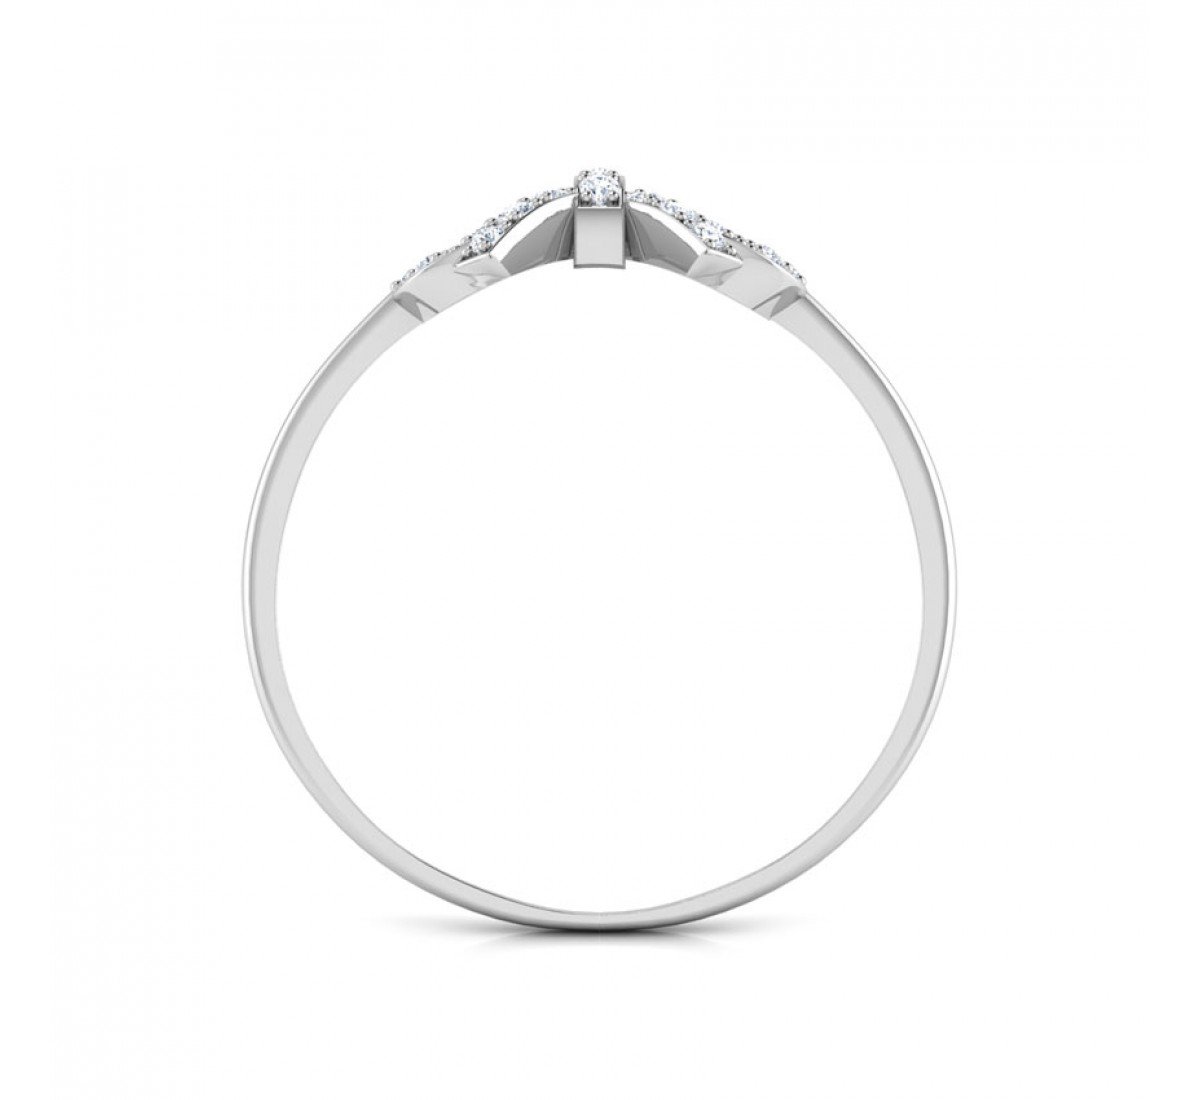 Interlinked Royal Diamond Ring